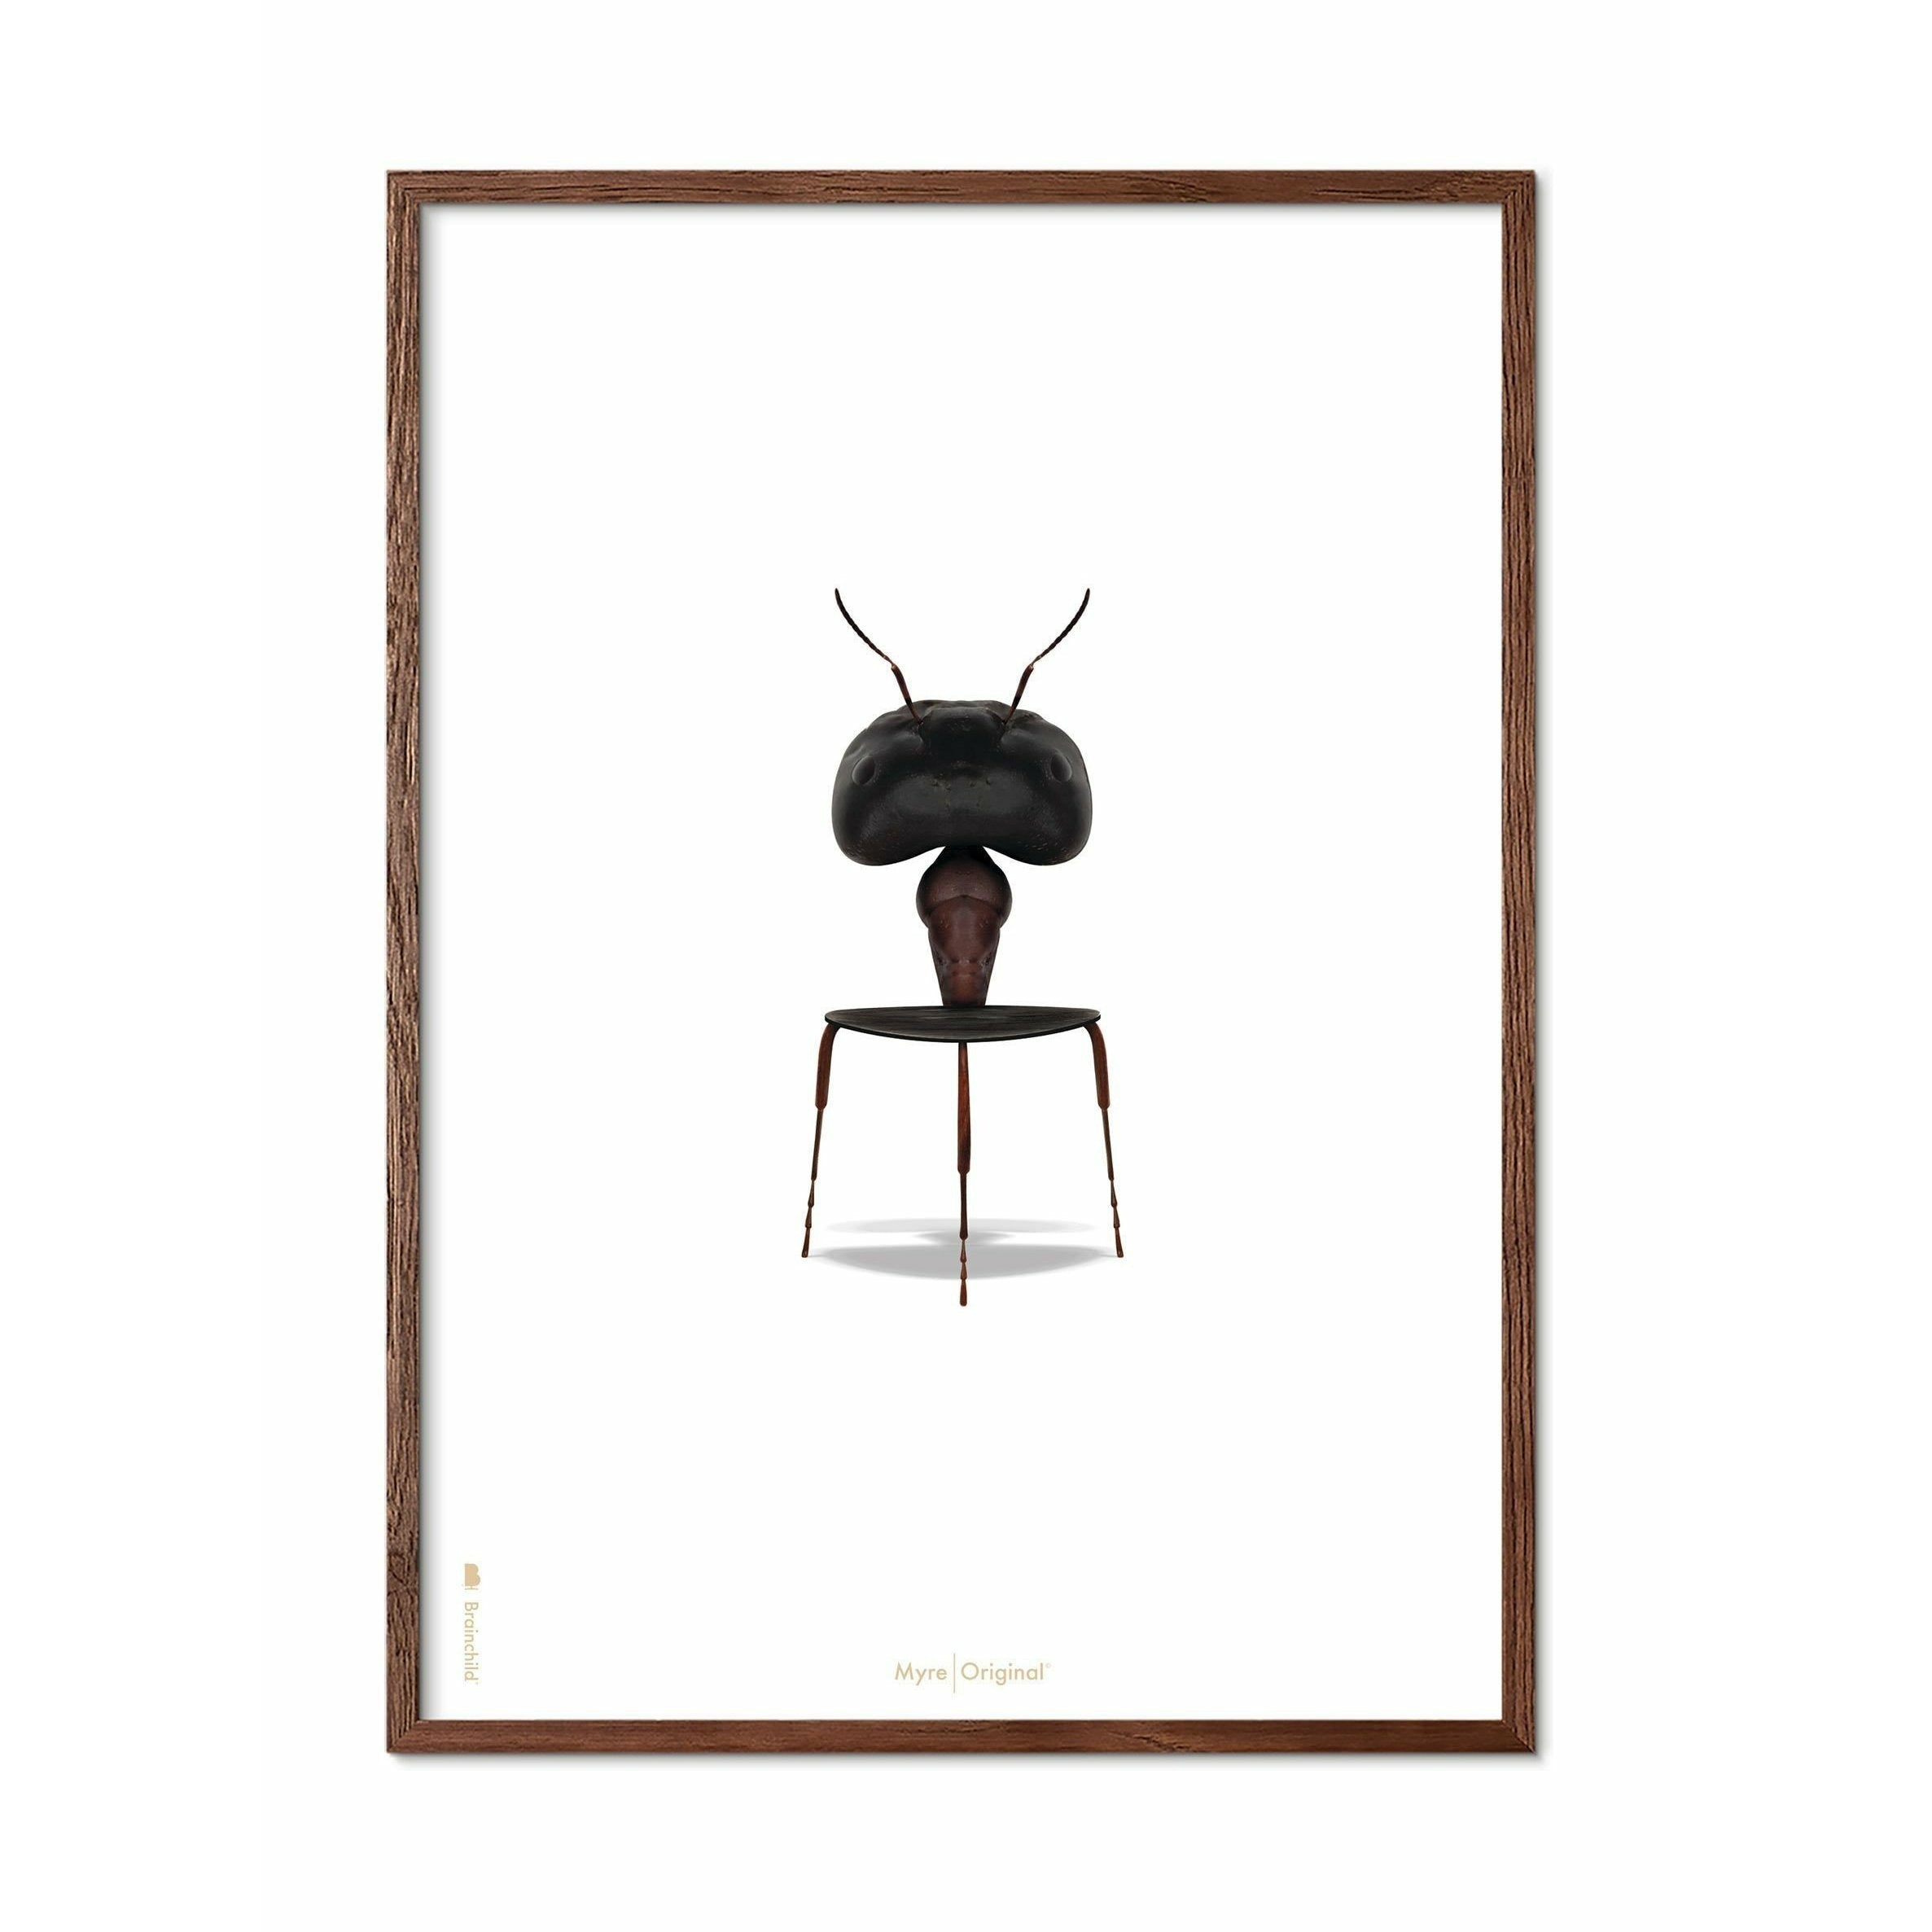 Póster clásico de hormigas de creación, marco hecho de madera oscura 50x70 cm, fondo blanco